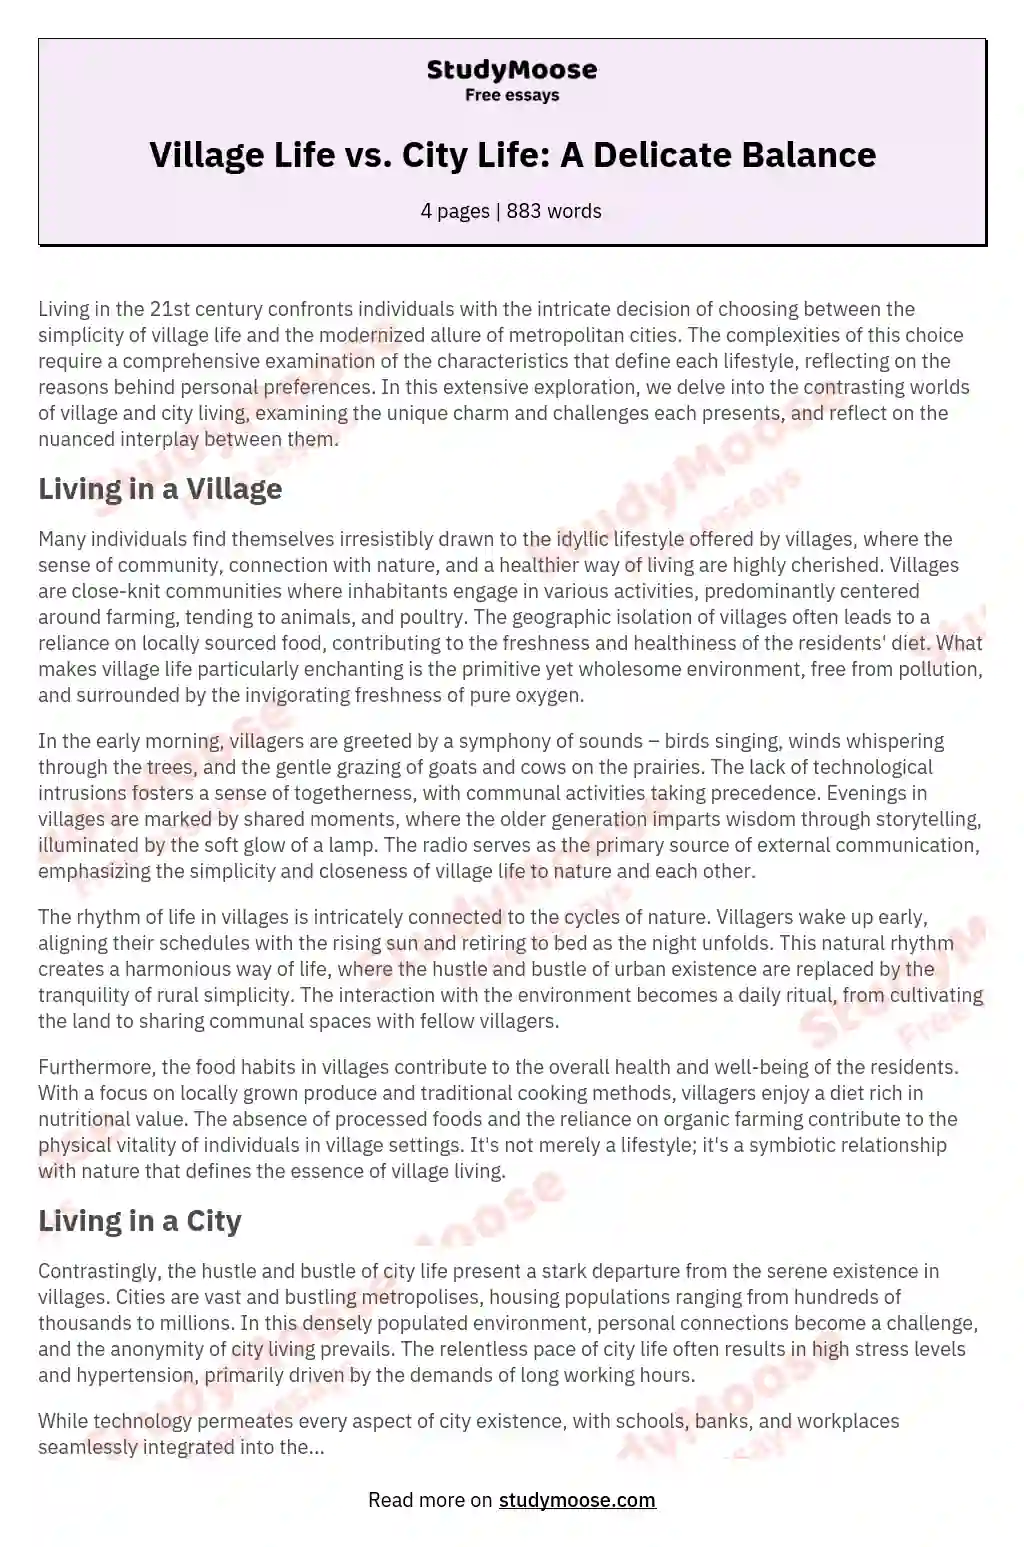 Village Life vs. City Life: A Delicate Balance essay